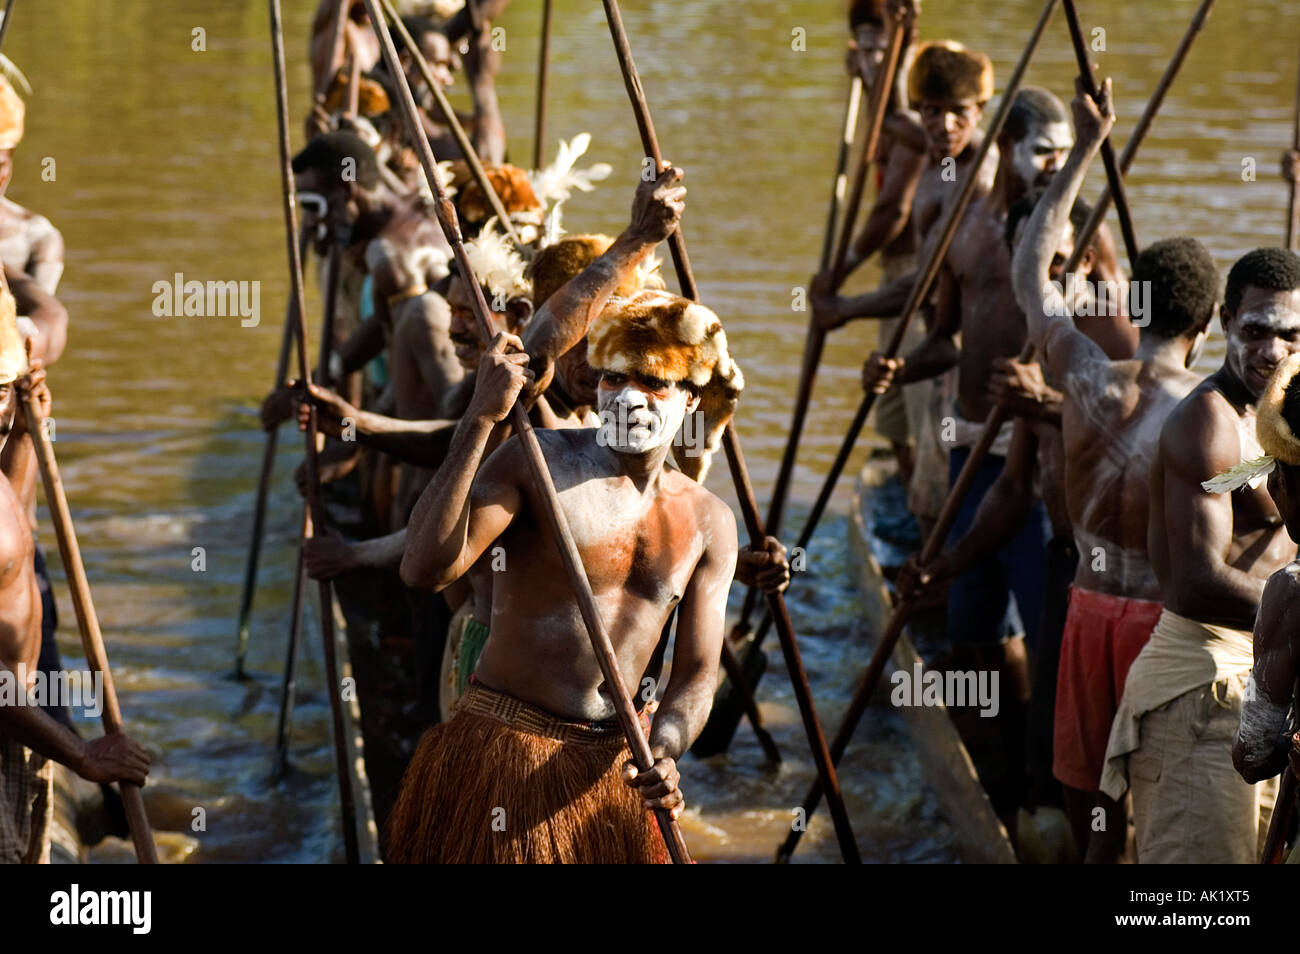 Canoe war ceremony of Asmat people, Irian Jaya Indonesia. Stock Photo